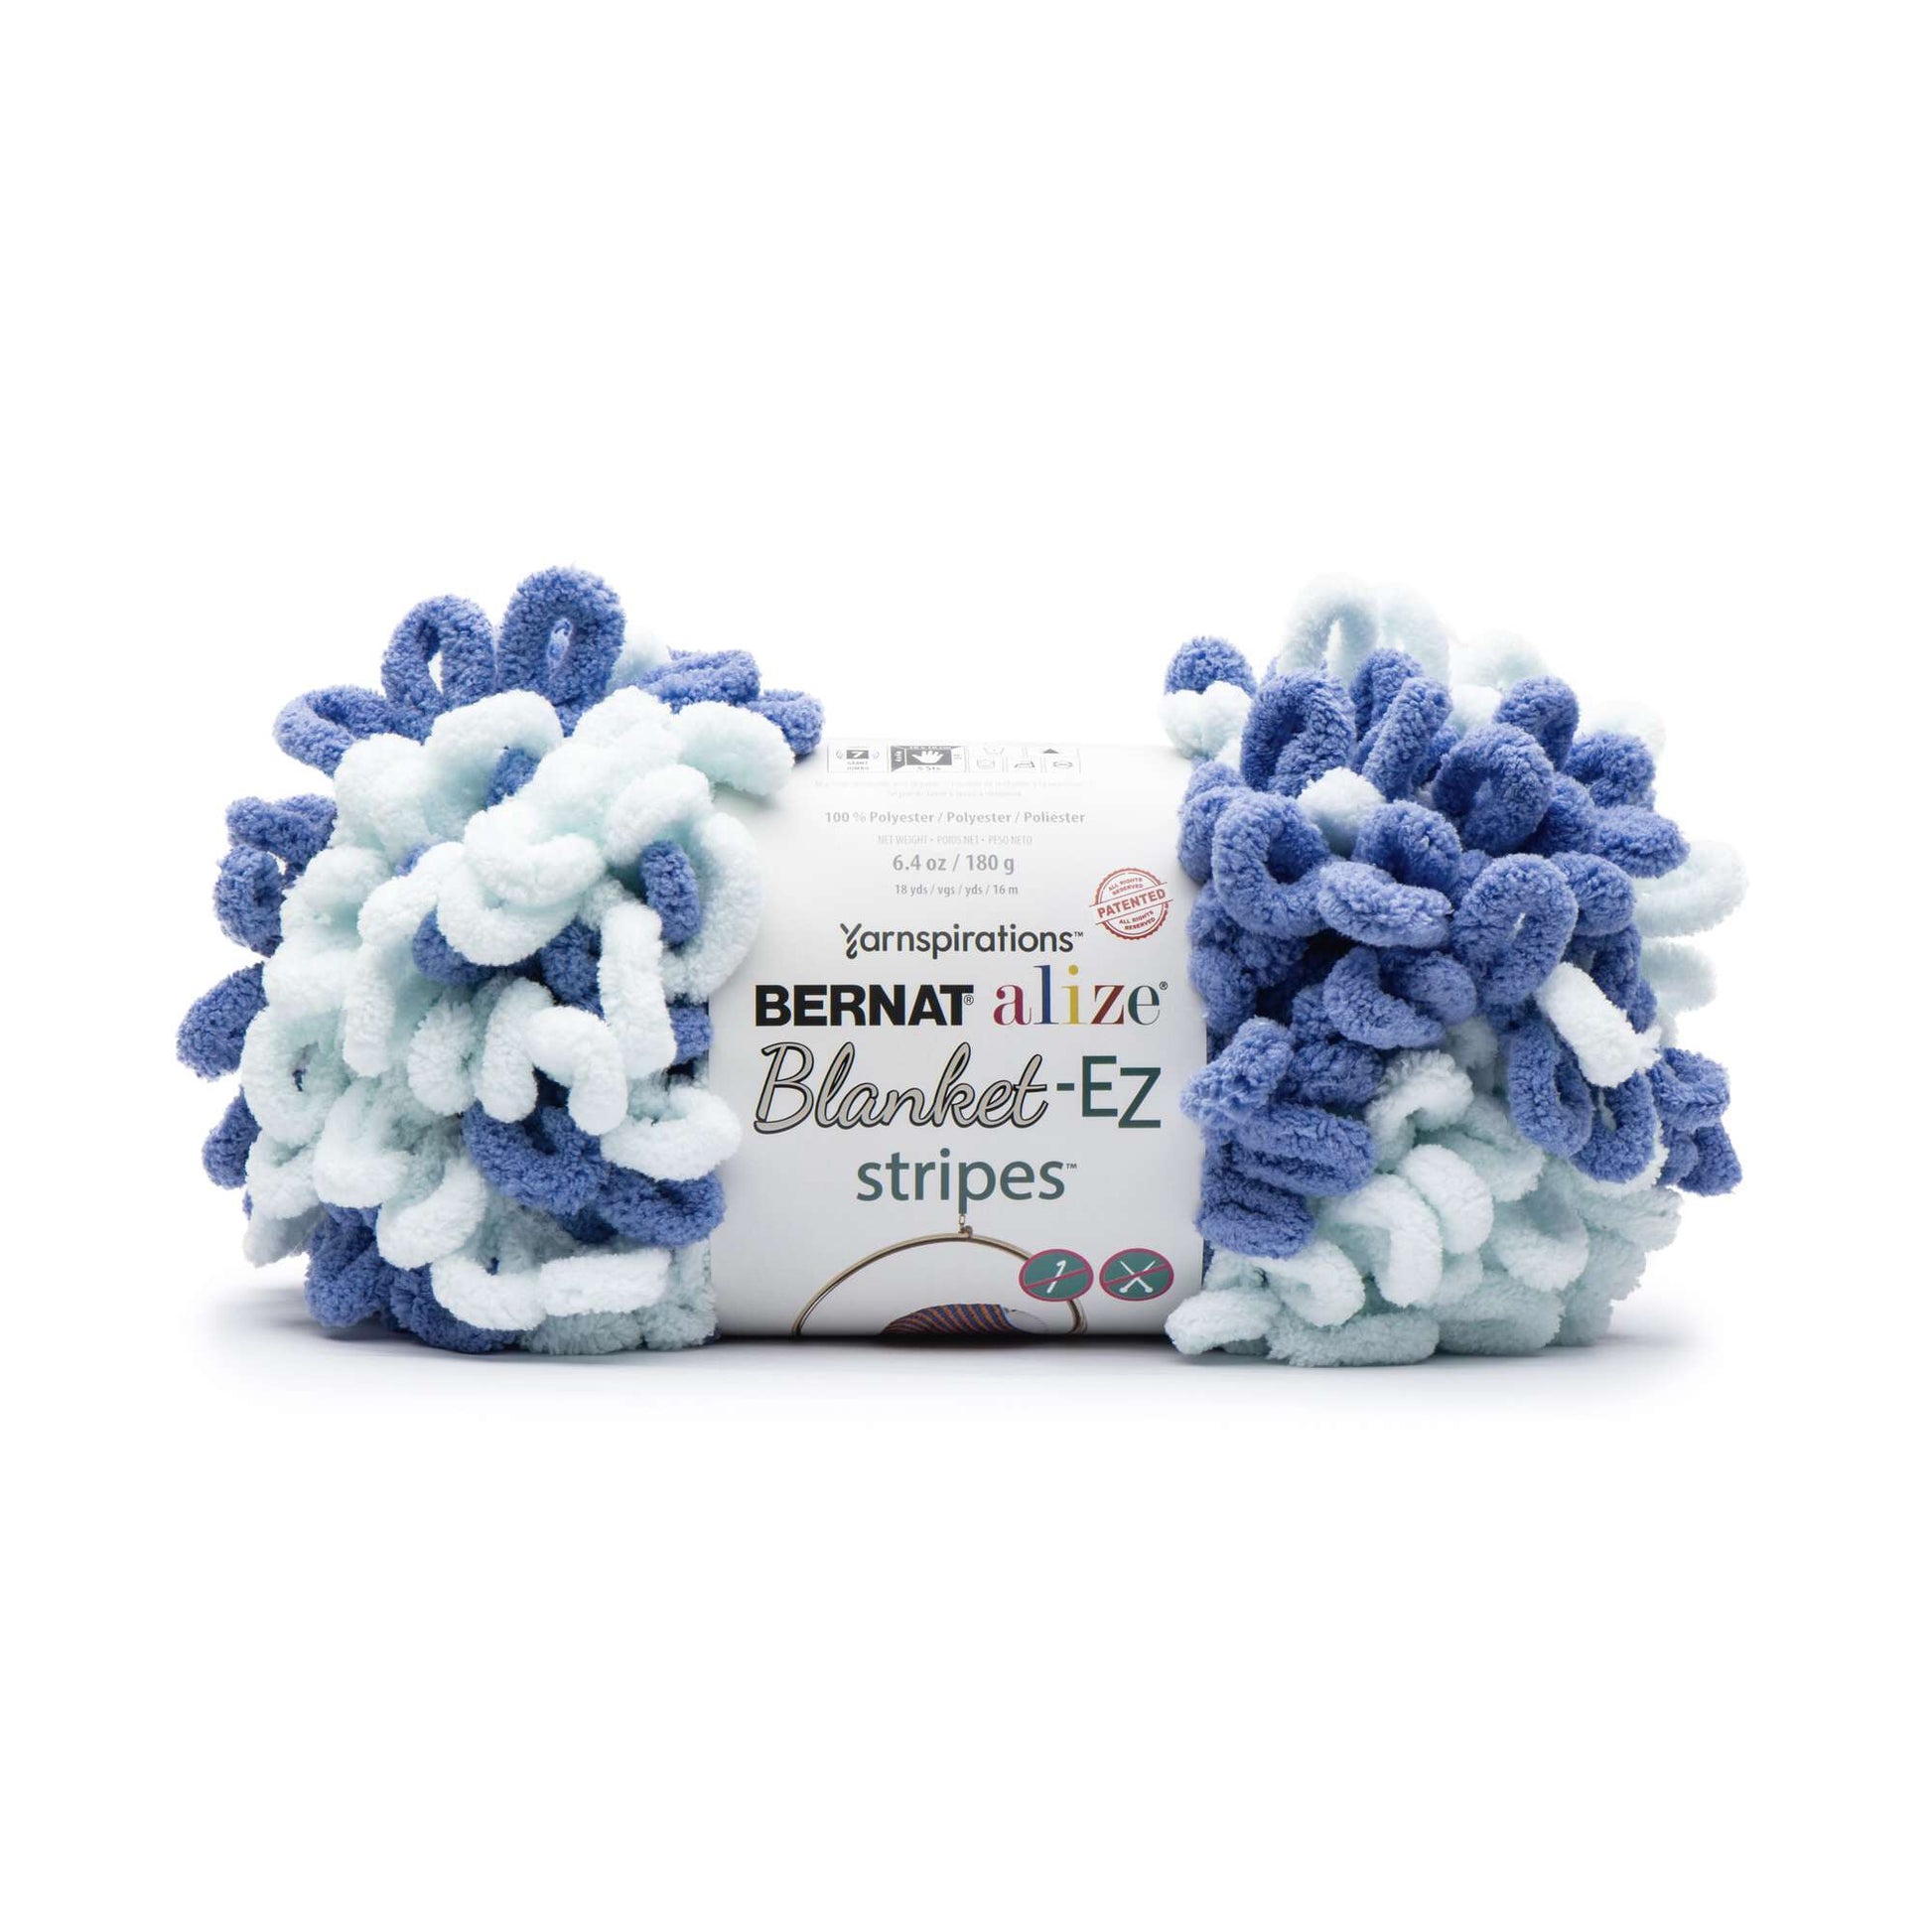 Bernat Alize Blanket-EZ Stripes Yarn - Discontinued shades